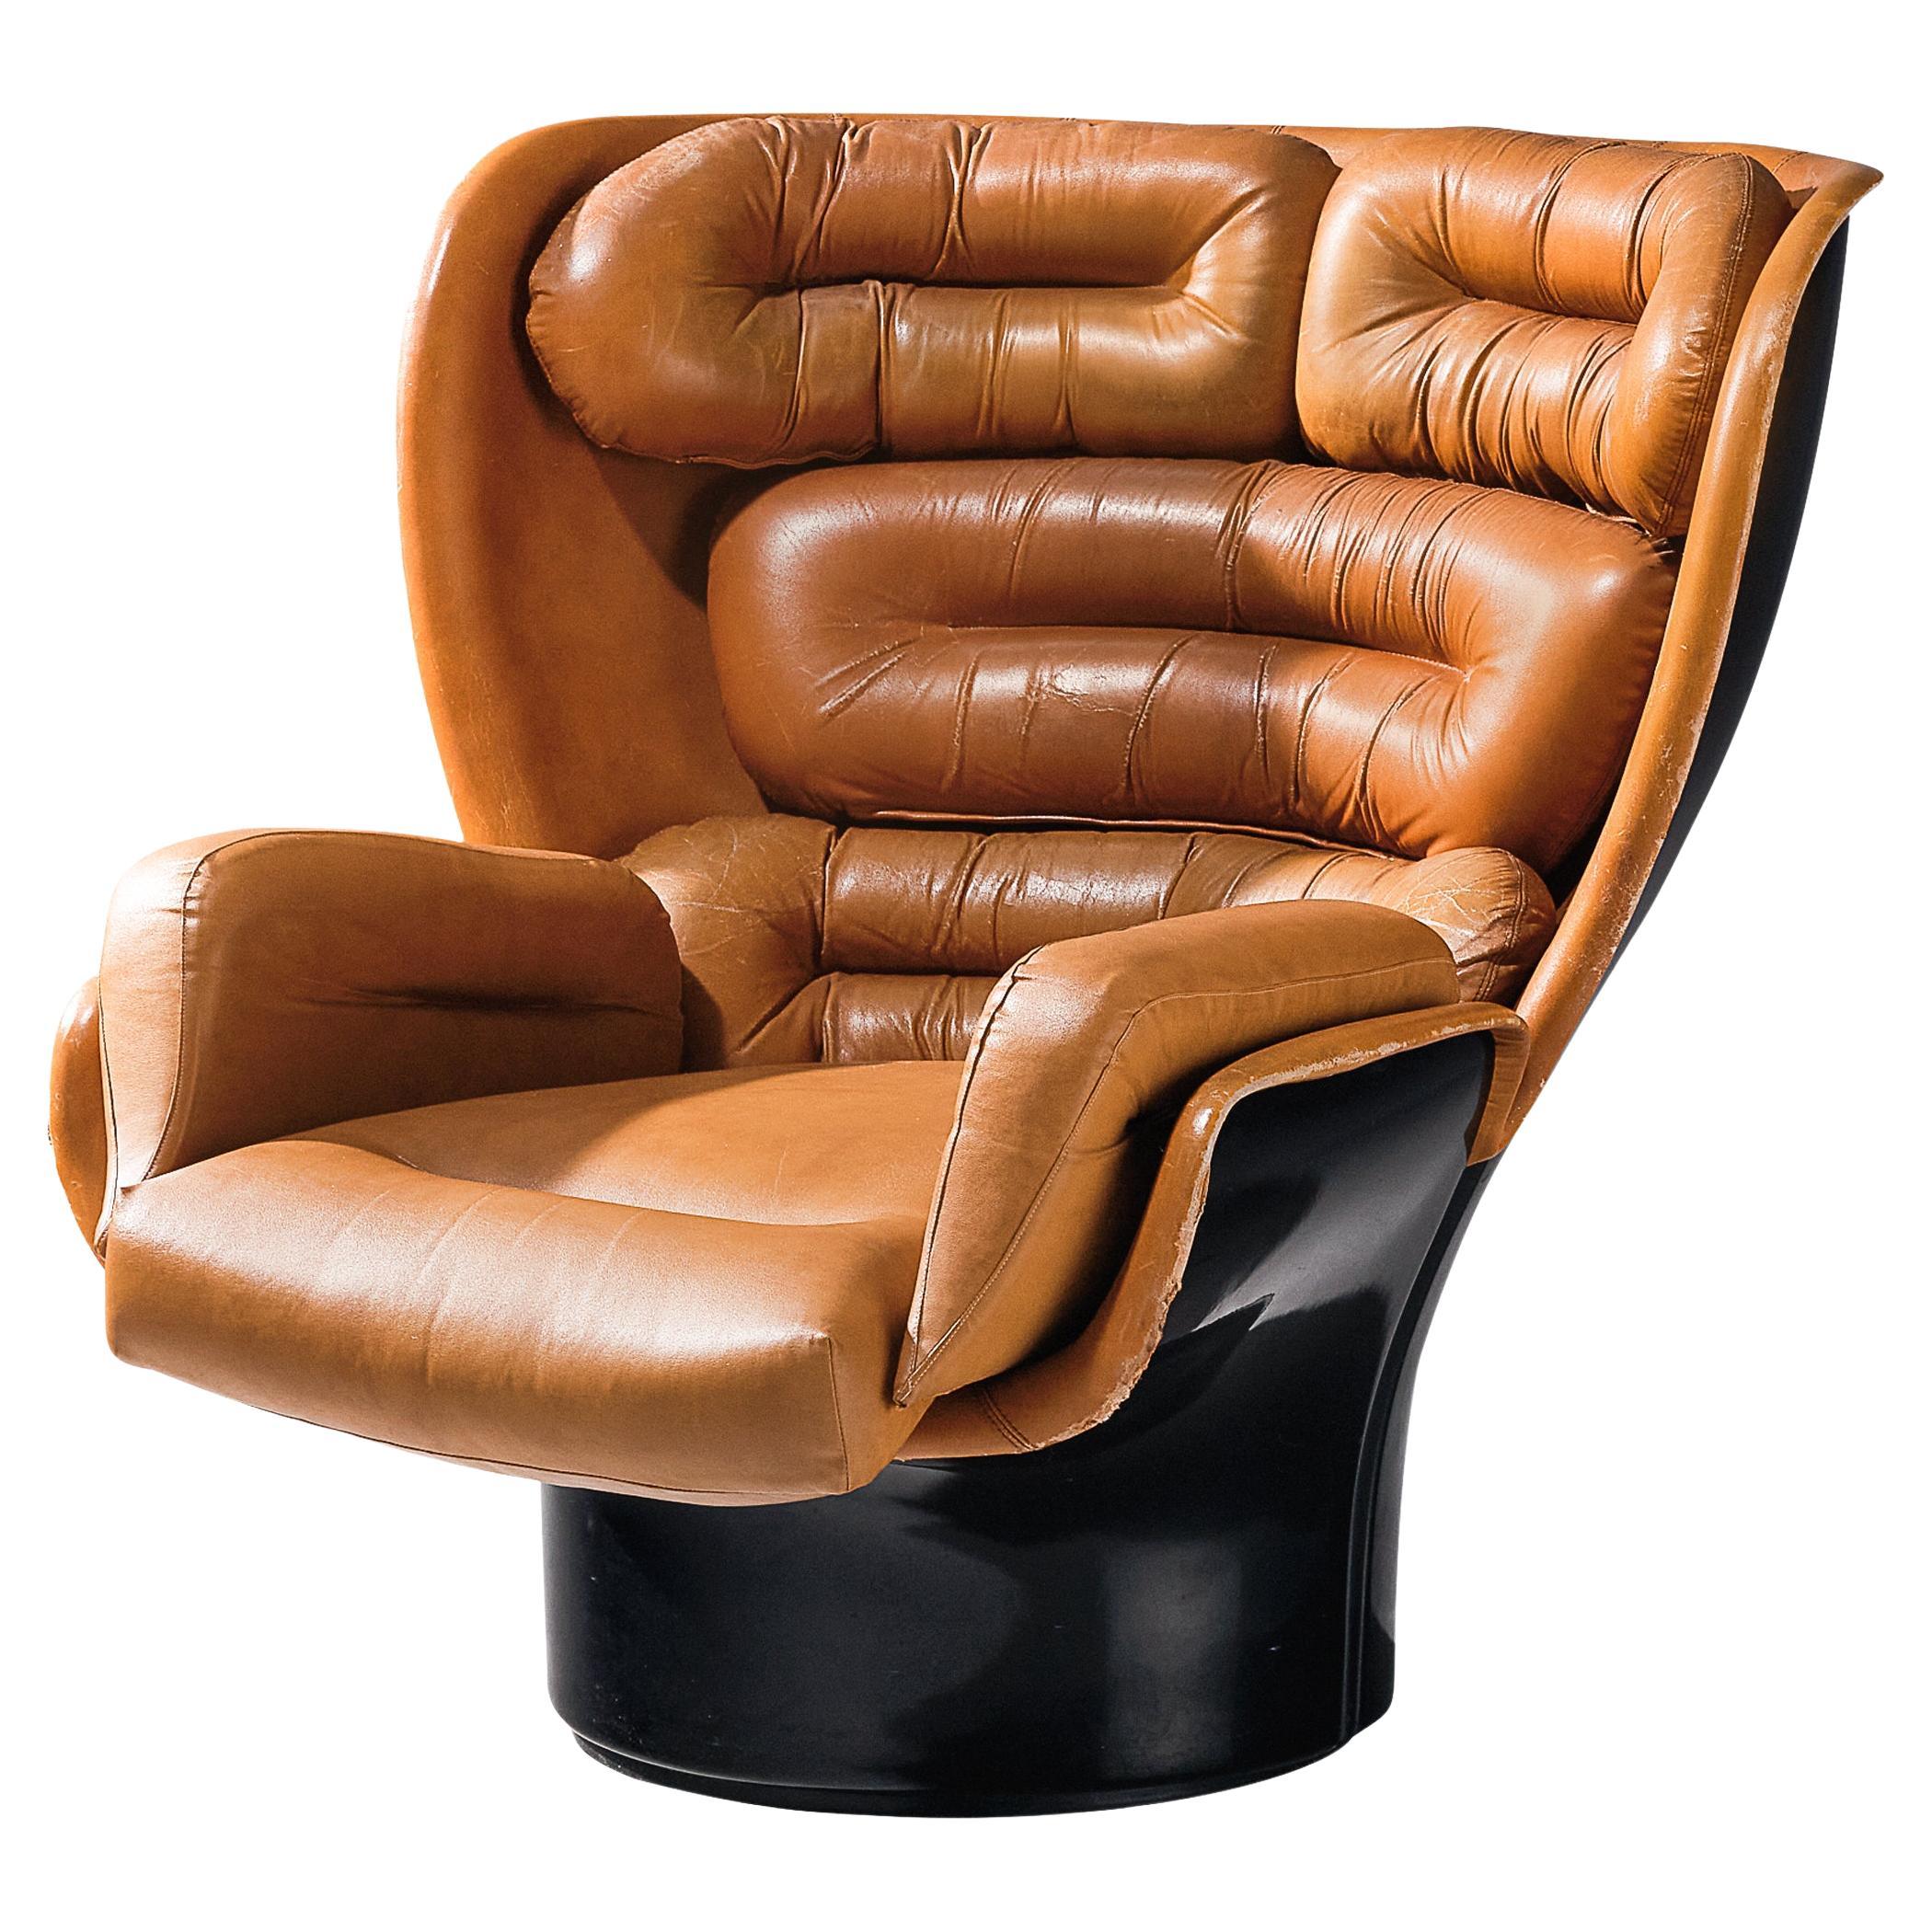 Joe Colombo ‘Elda’ Lounge Chair in Cognac Leather and Black Fiberglass